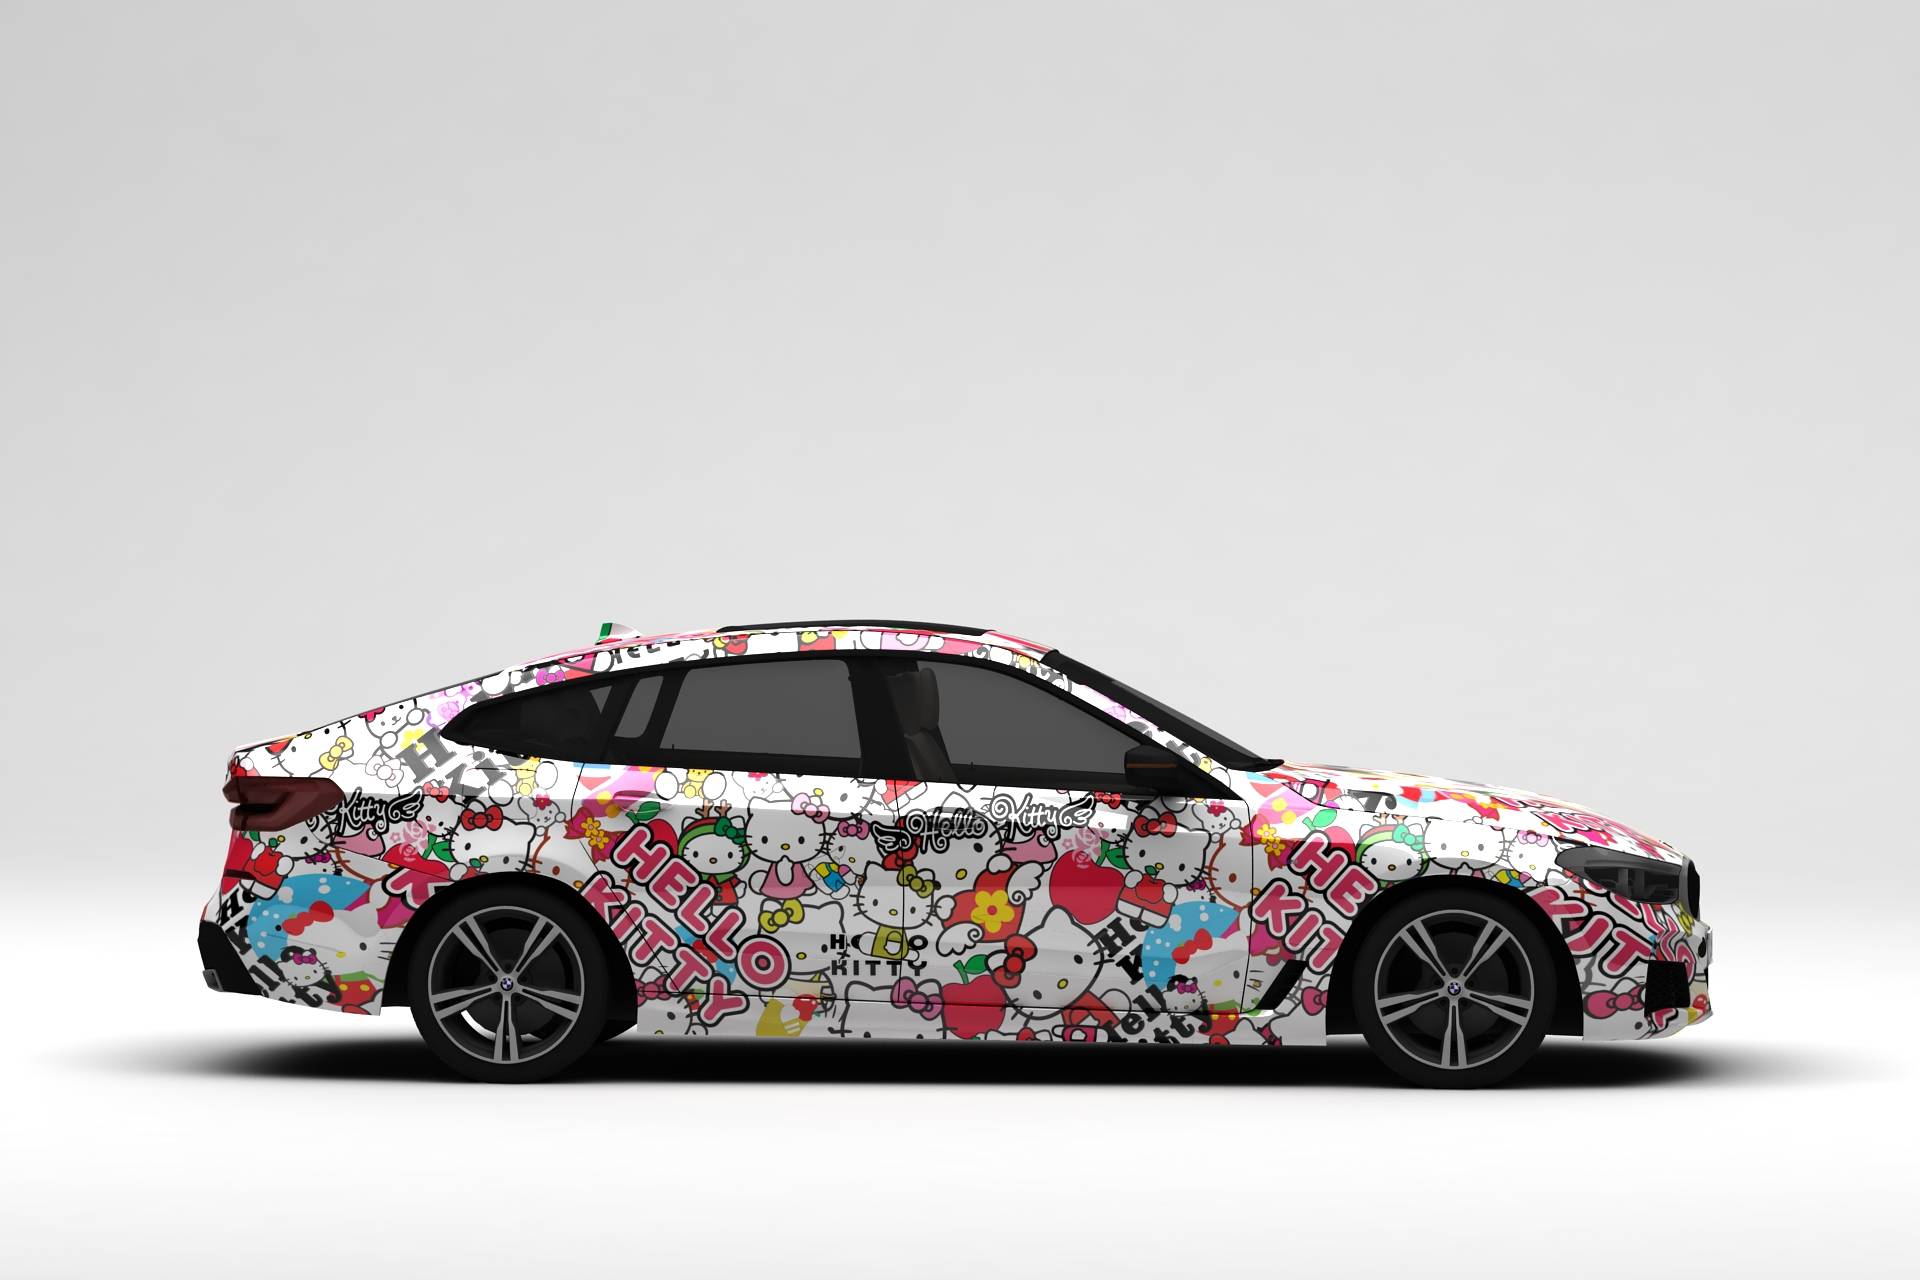 Full Car Graffiti Wrap Hello Kitty Fit With Any Cars Vinyl